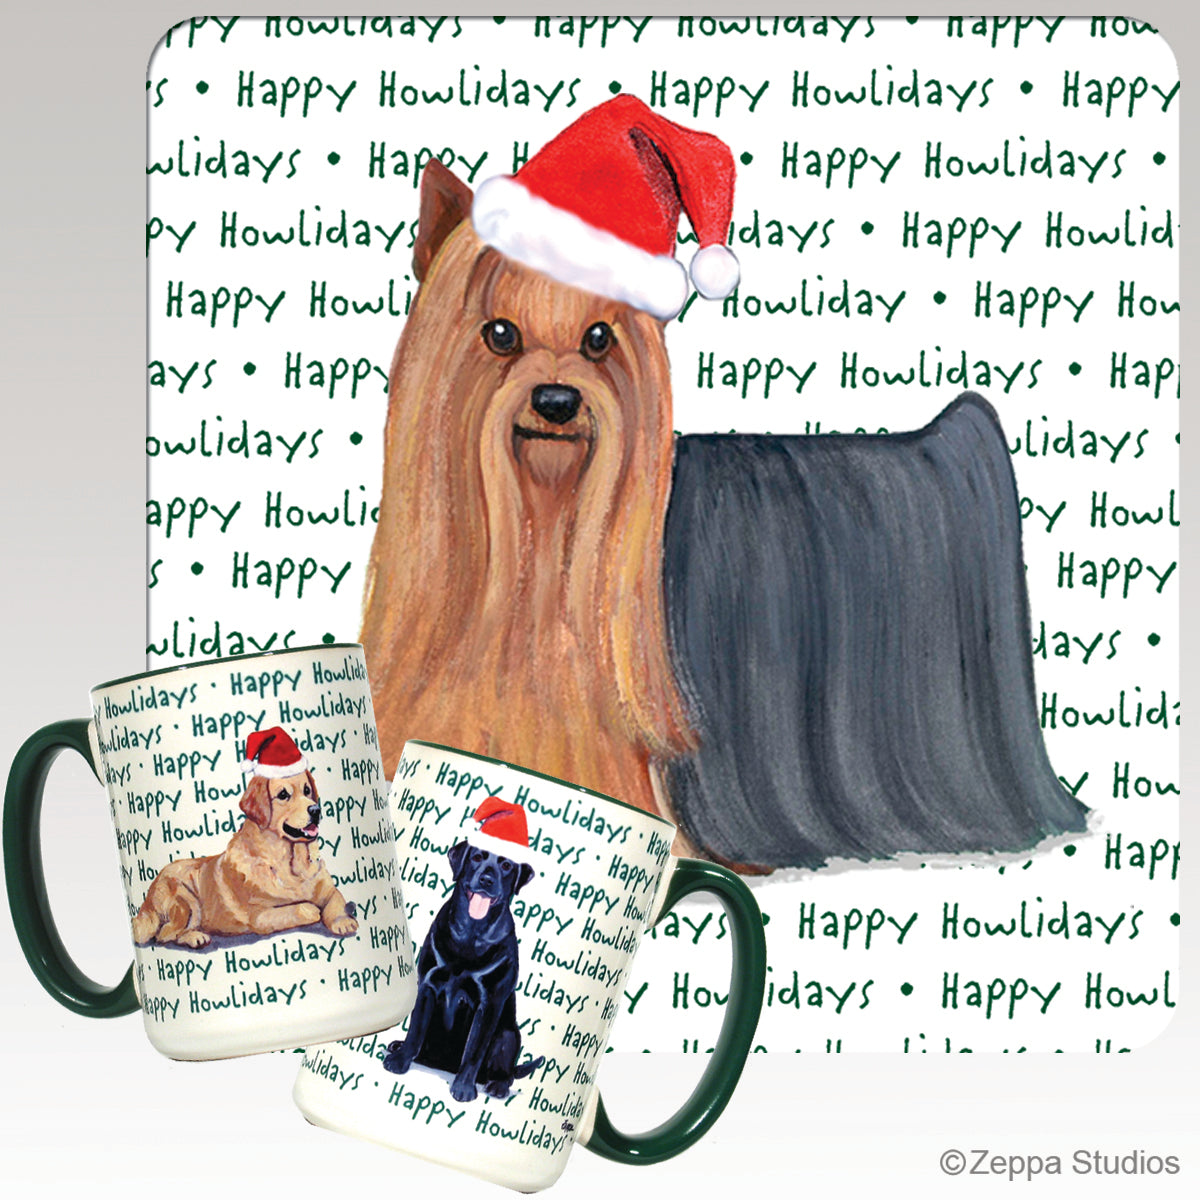 Yorkshire Terrier Christmas Mugs